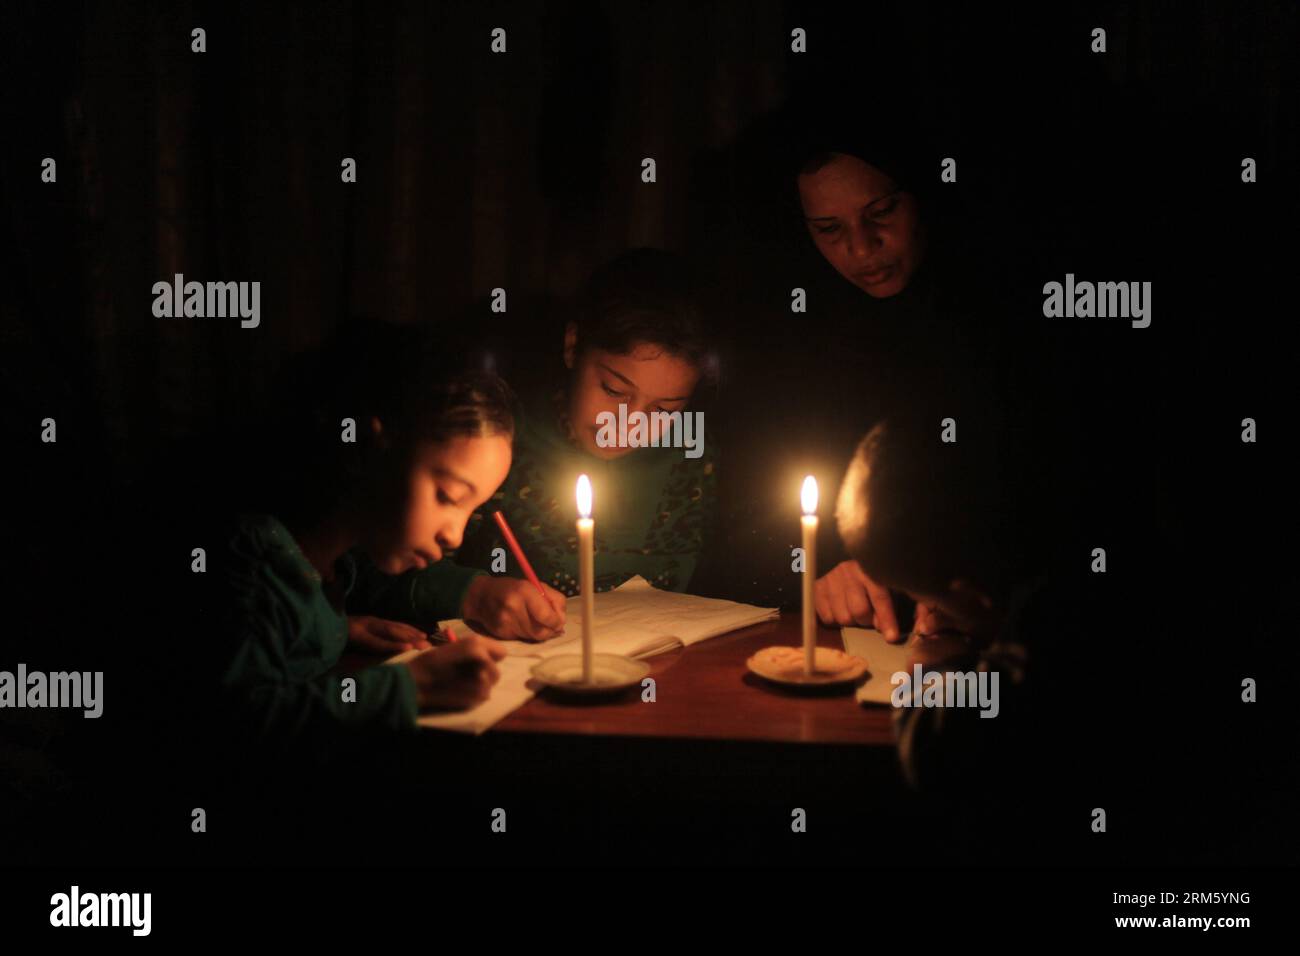 Bildnummer: 60746194  Datum: 22.11.2013  Copyright: imago/Xinhua     Palestinians refugee kids study with their mother at their house during the electricity outage in Al Shatea refugee camp in the west of Gaza city, on Nov. 22, 2013. (Xinhua/Wissam Nassar) (jl) MIDEAST-GAZA-ELECTRICITY PUBLICATIONxNOTxINxCHN Gesellschaft xdp x2x 2013 quer premiumd o0 Land leute kerze kerzenschein stromausfall strom ausfall dunkel familie kinder hausaufgaben schule bildung Stock Photo